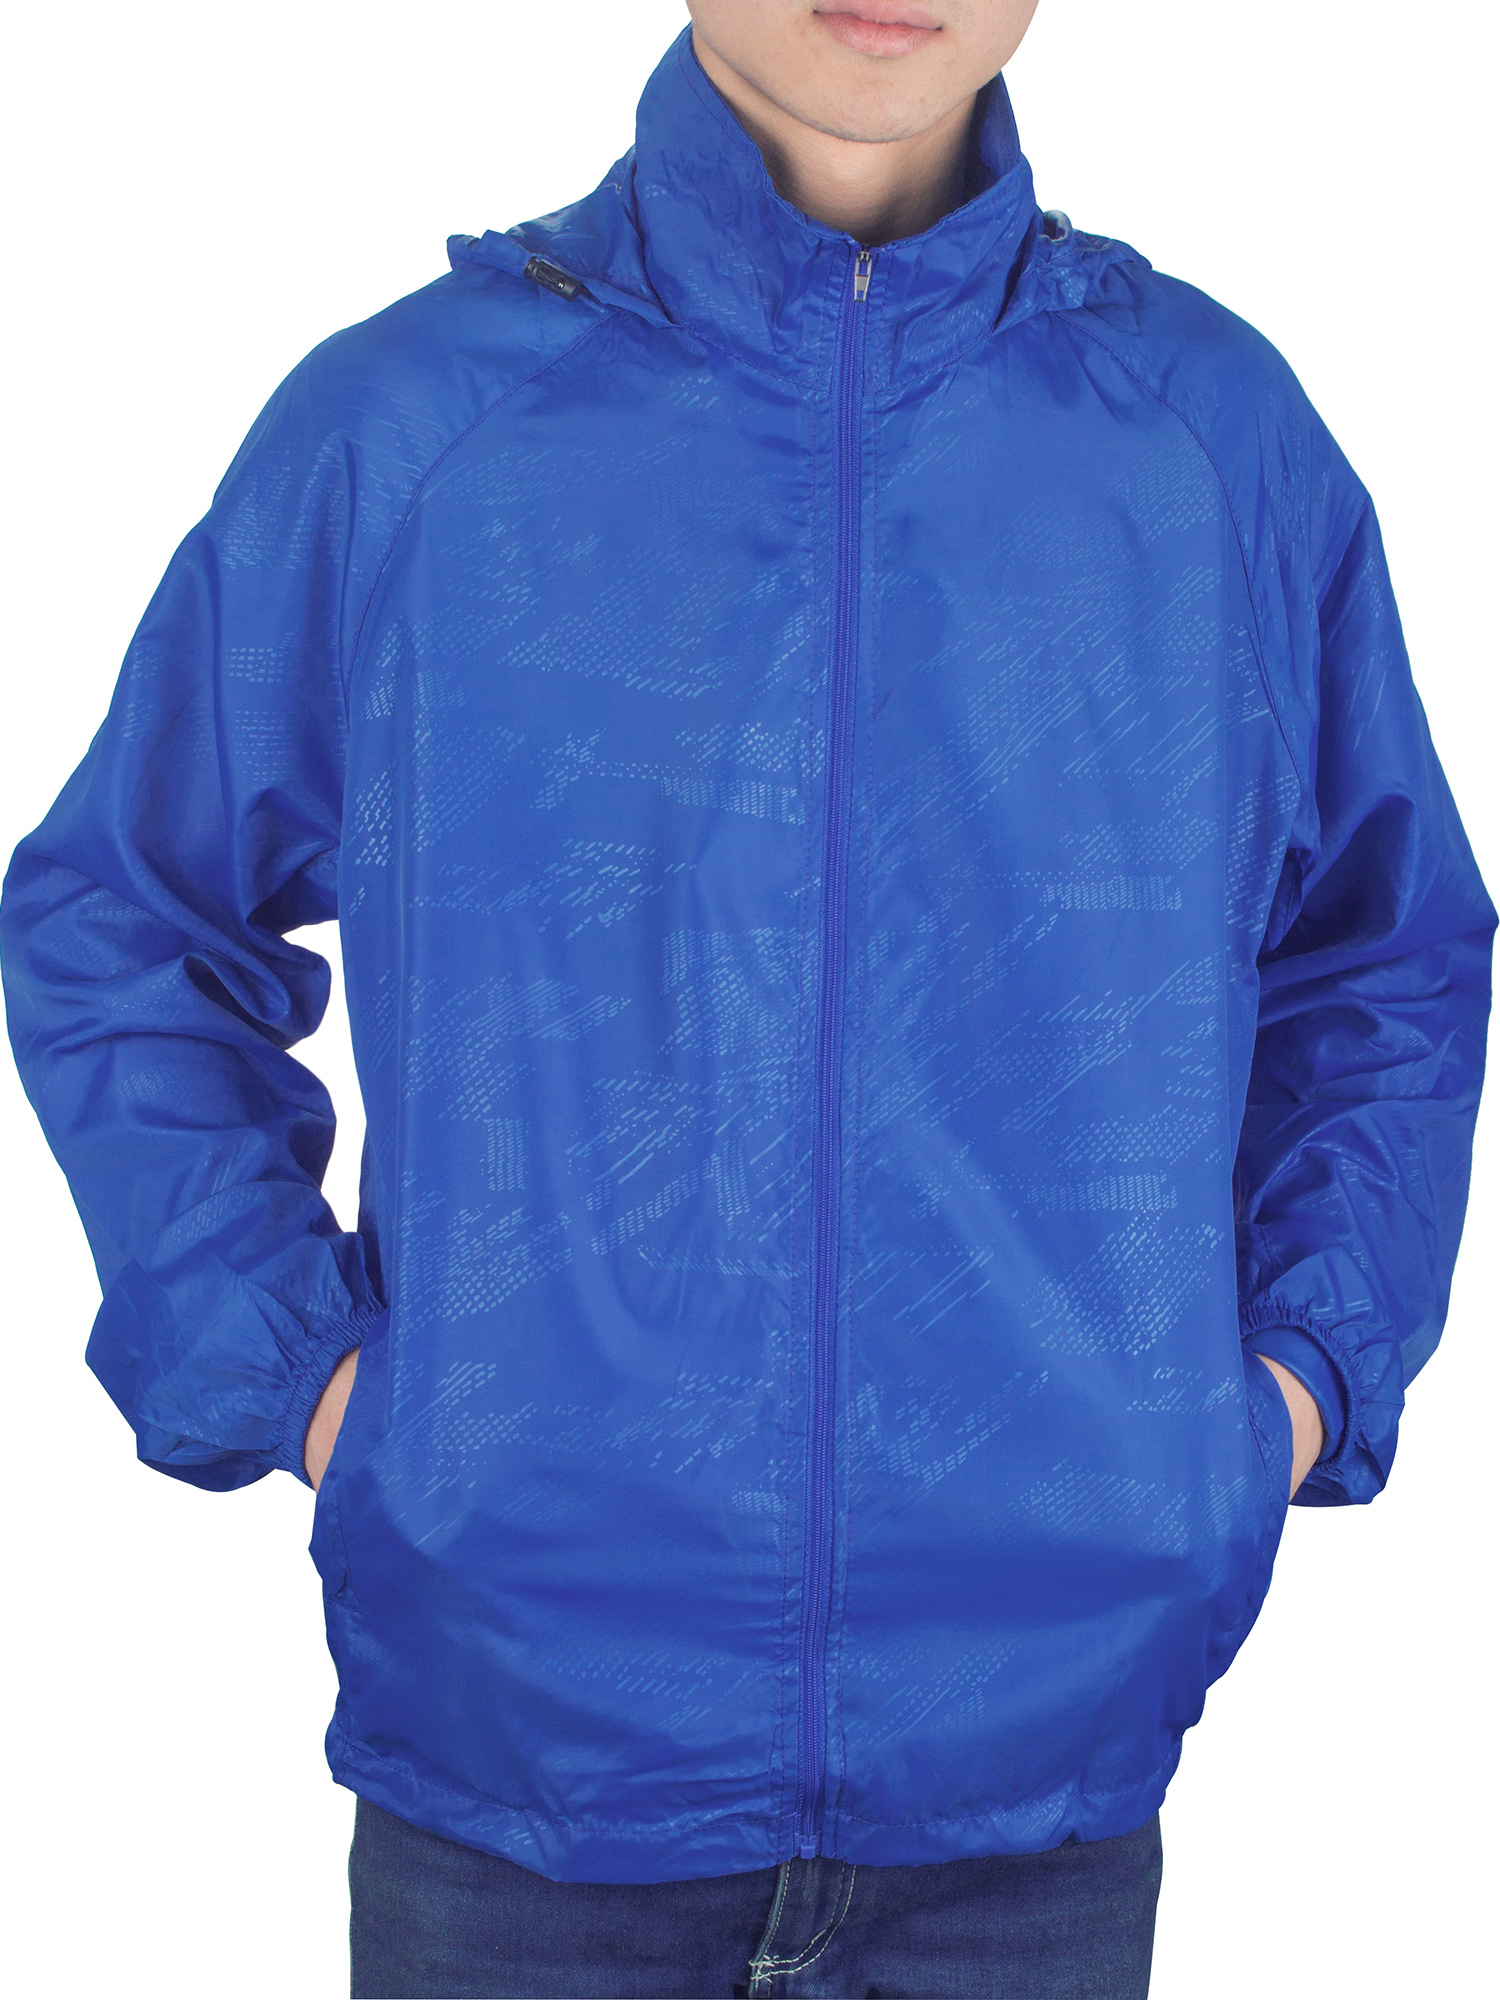 FOCUSSEXY Women's Hooded Rain Jacket Waterproof Windbreaker Hooded Rain Outdoor Poncho Running Jackets Womens Raincoat Packable Hooded Shirt Quick Dry - image 5 of 8